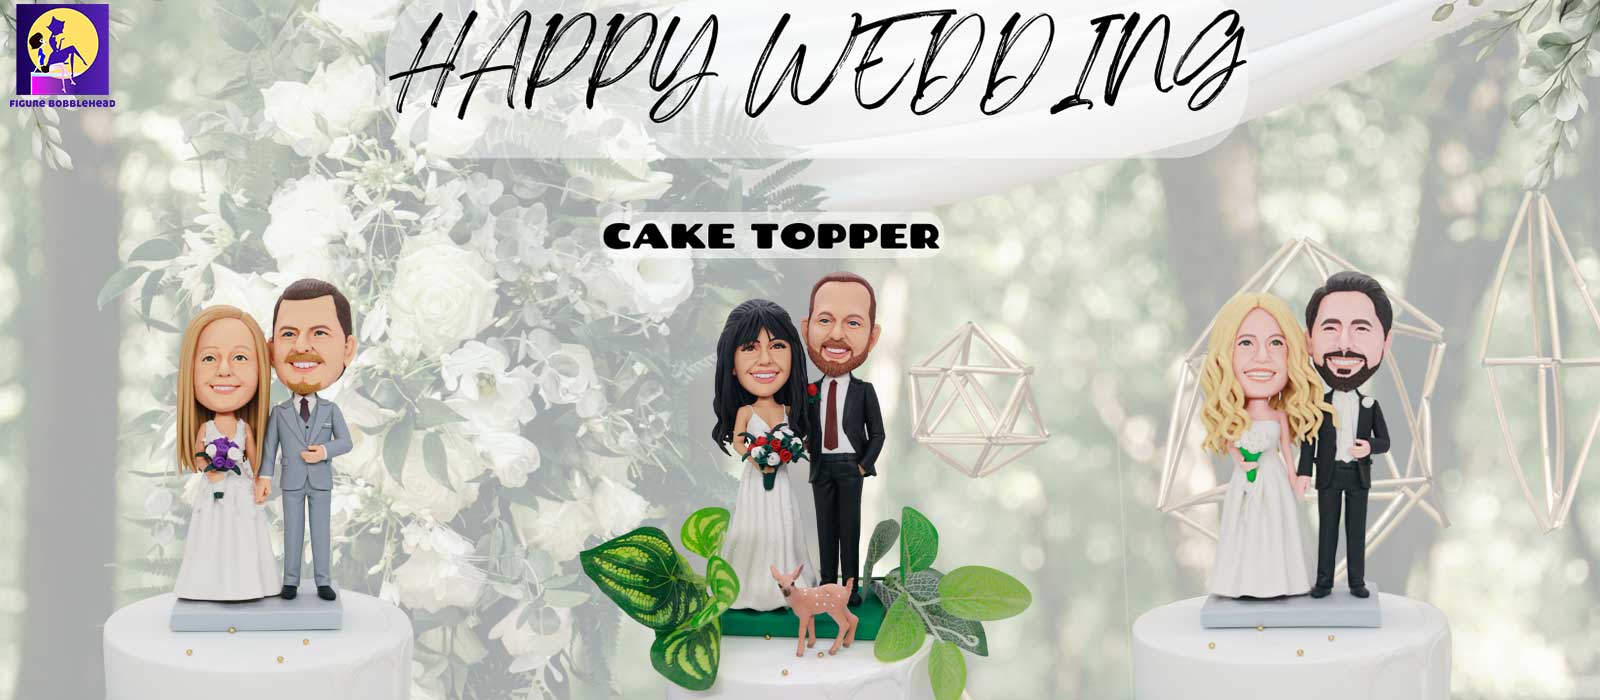 Custom Wedding Bobbleheads As Your Unique Wedding Cake Topper